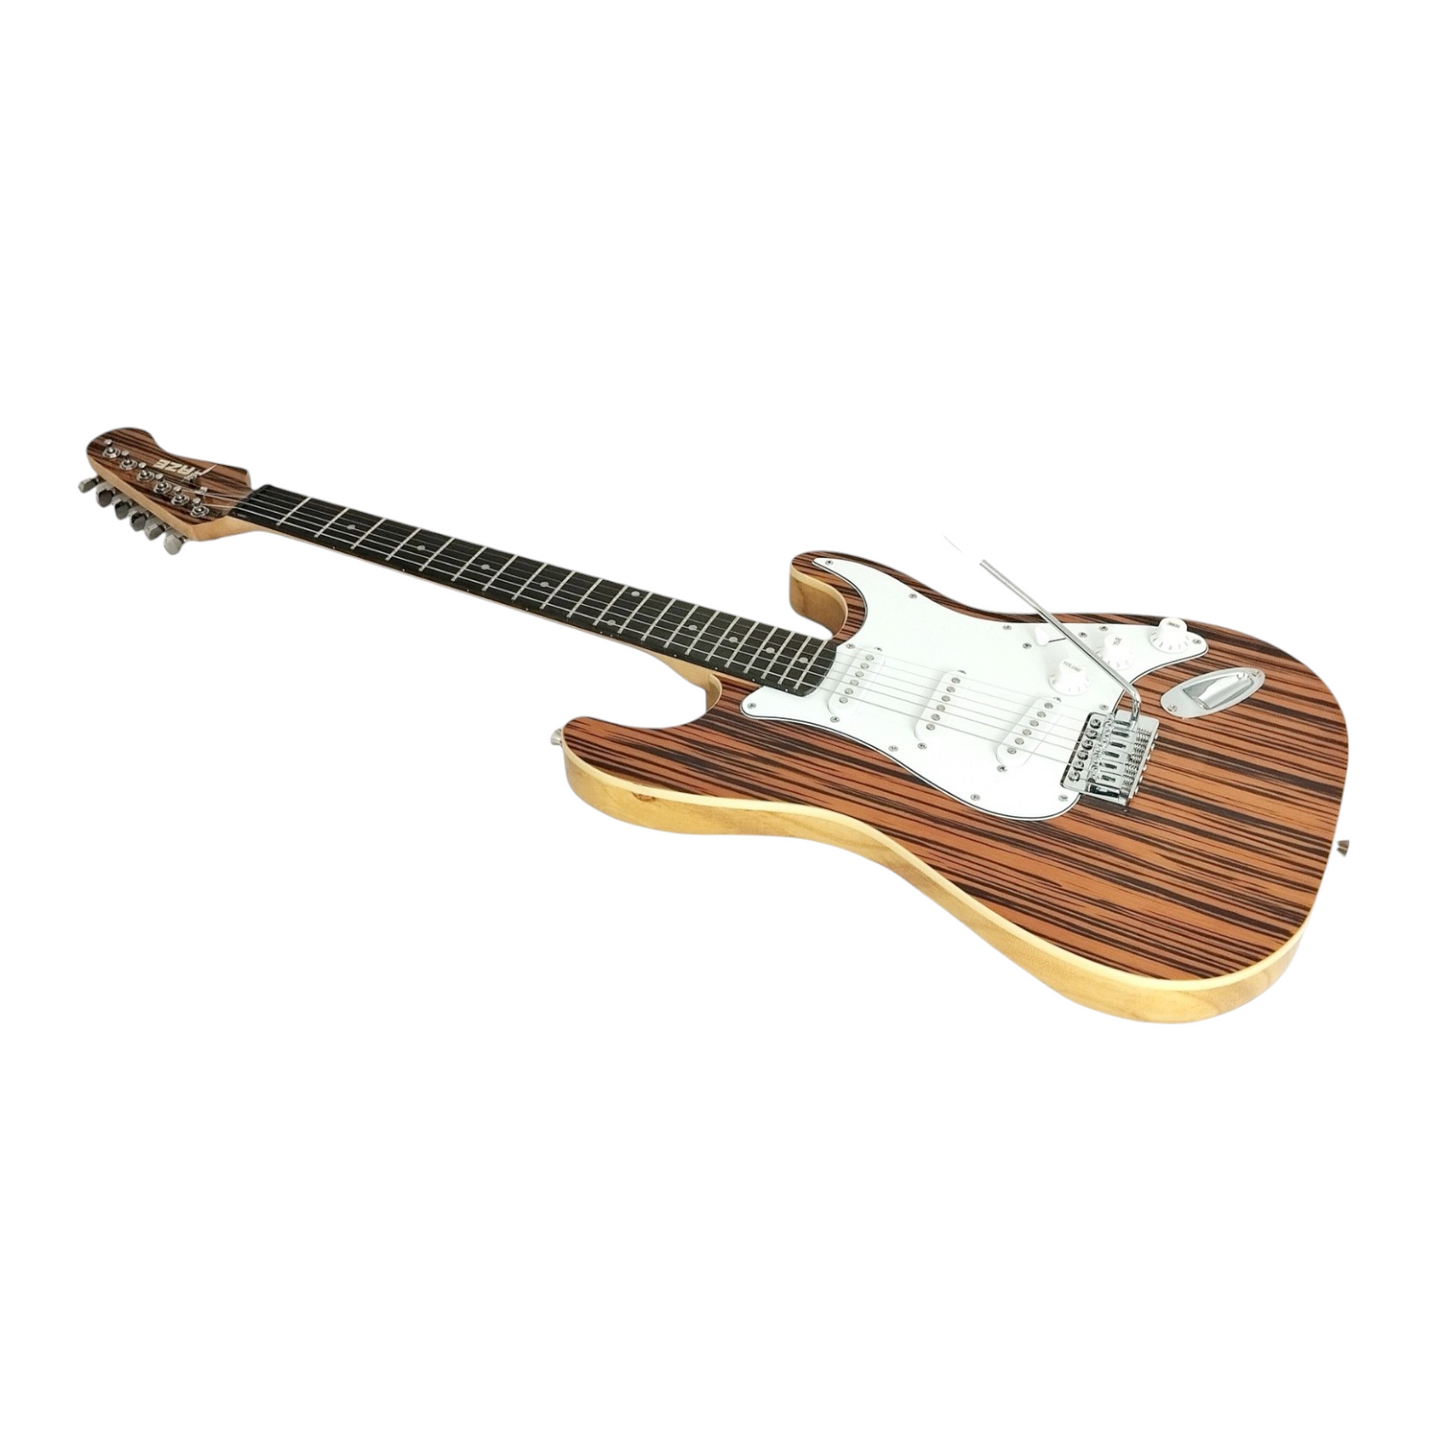 Haze Lightweight Solid Paulownia Exotic Cocobolo Veneer HST Electric Guitar - Brown HSST1901AF852